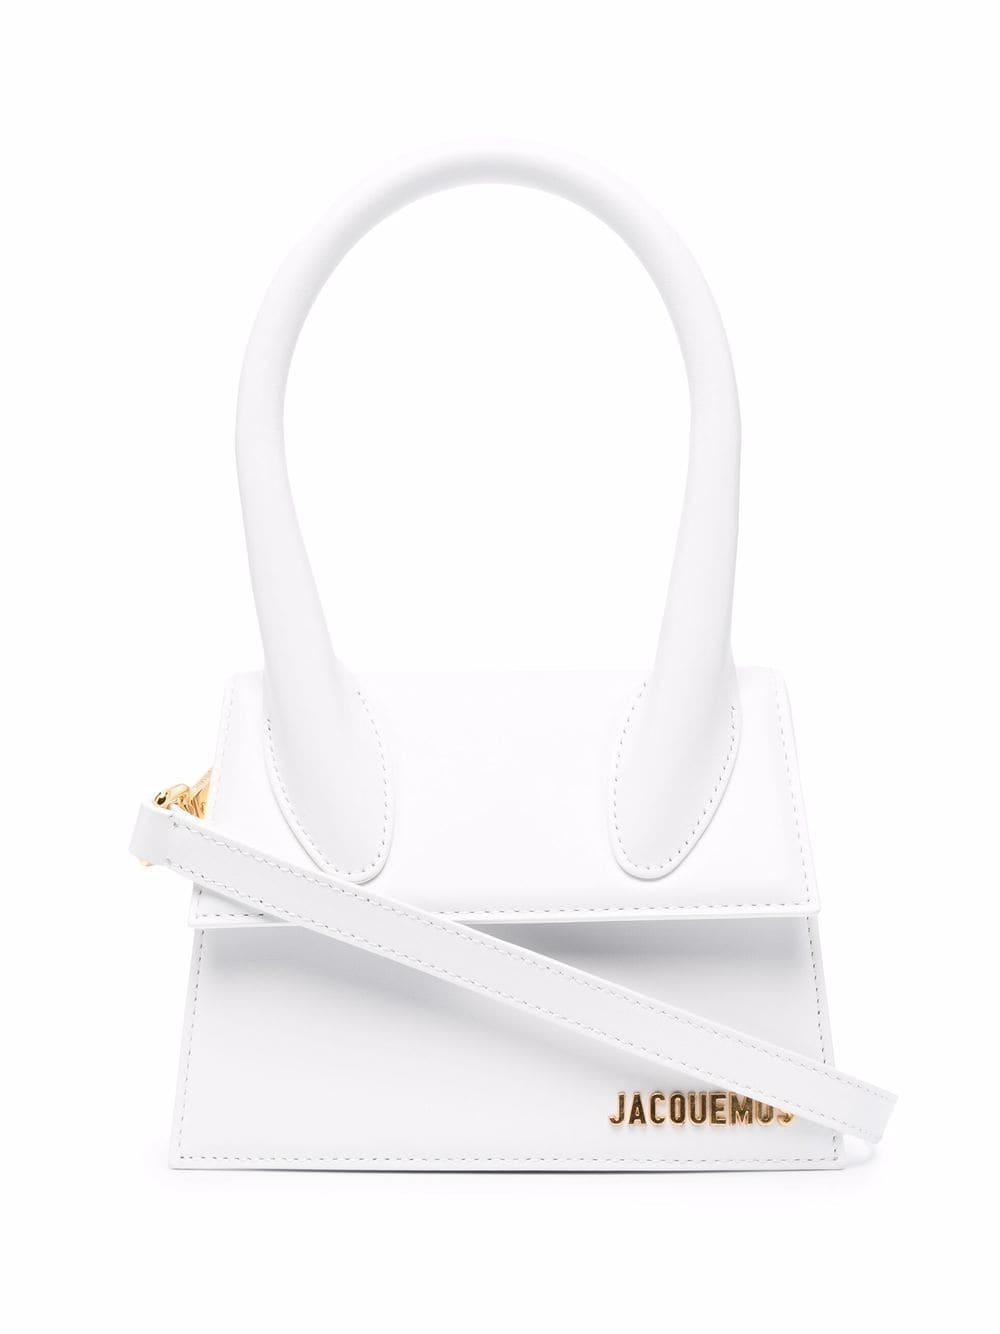 Jacquemus White 'Le Chiquito Moyen' Bag